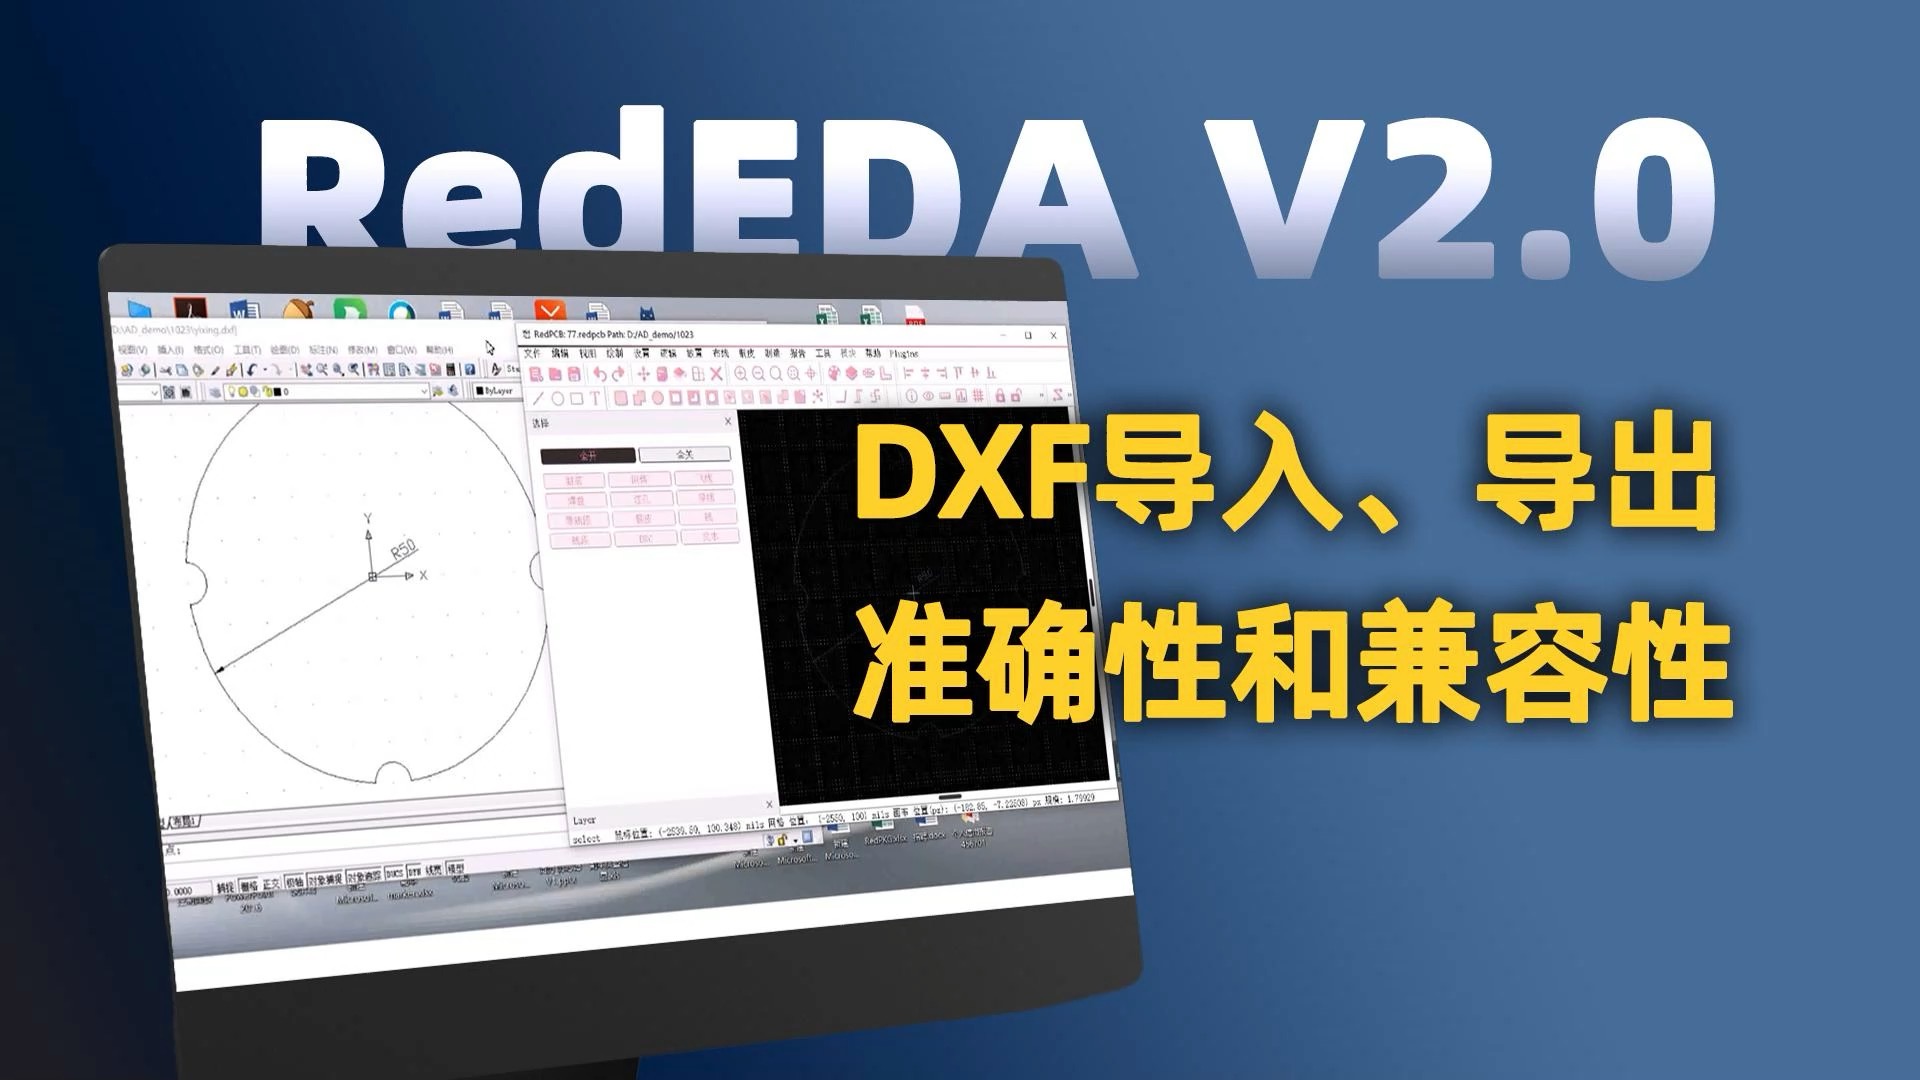 国产EDA软件RedEDA支持DXF导入异形板，导出导入准确~#CAD#国产EDA #PCB设计#pcb设计 